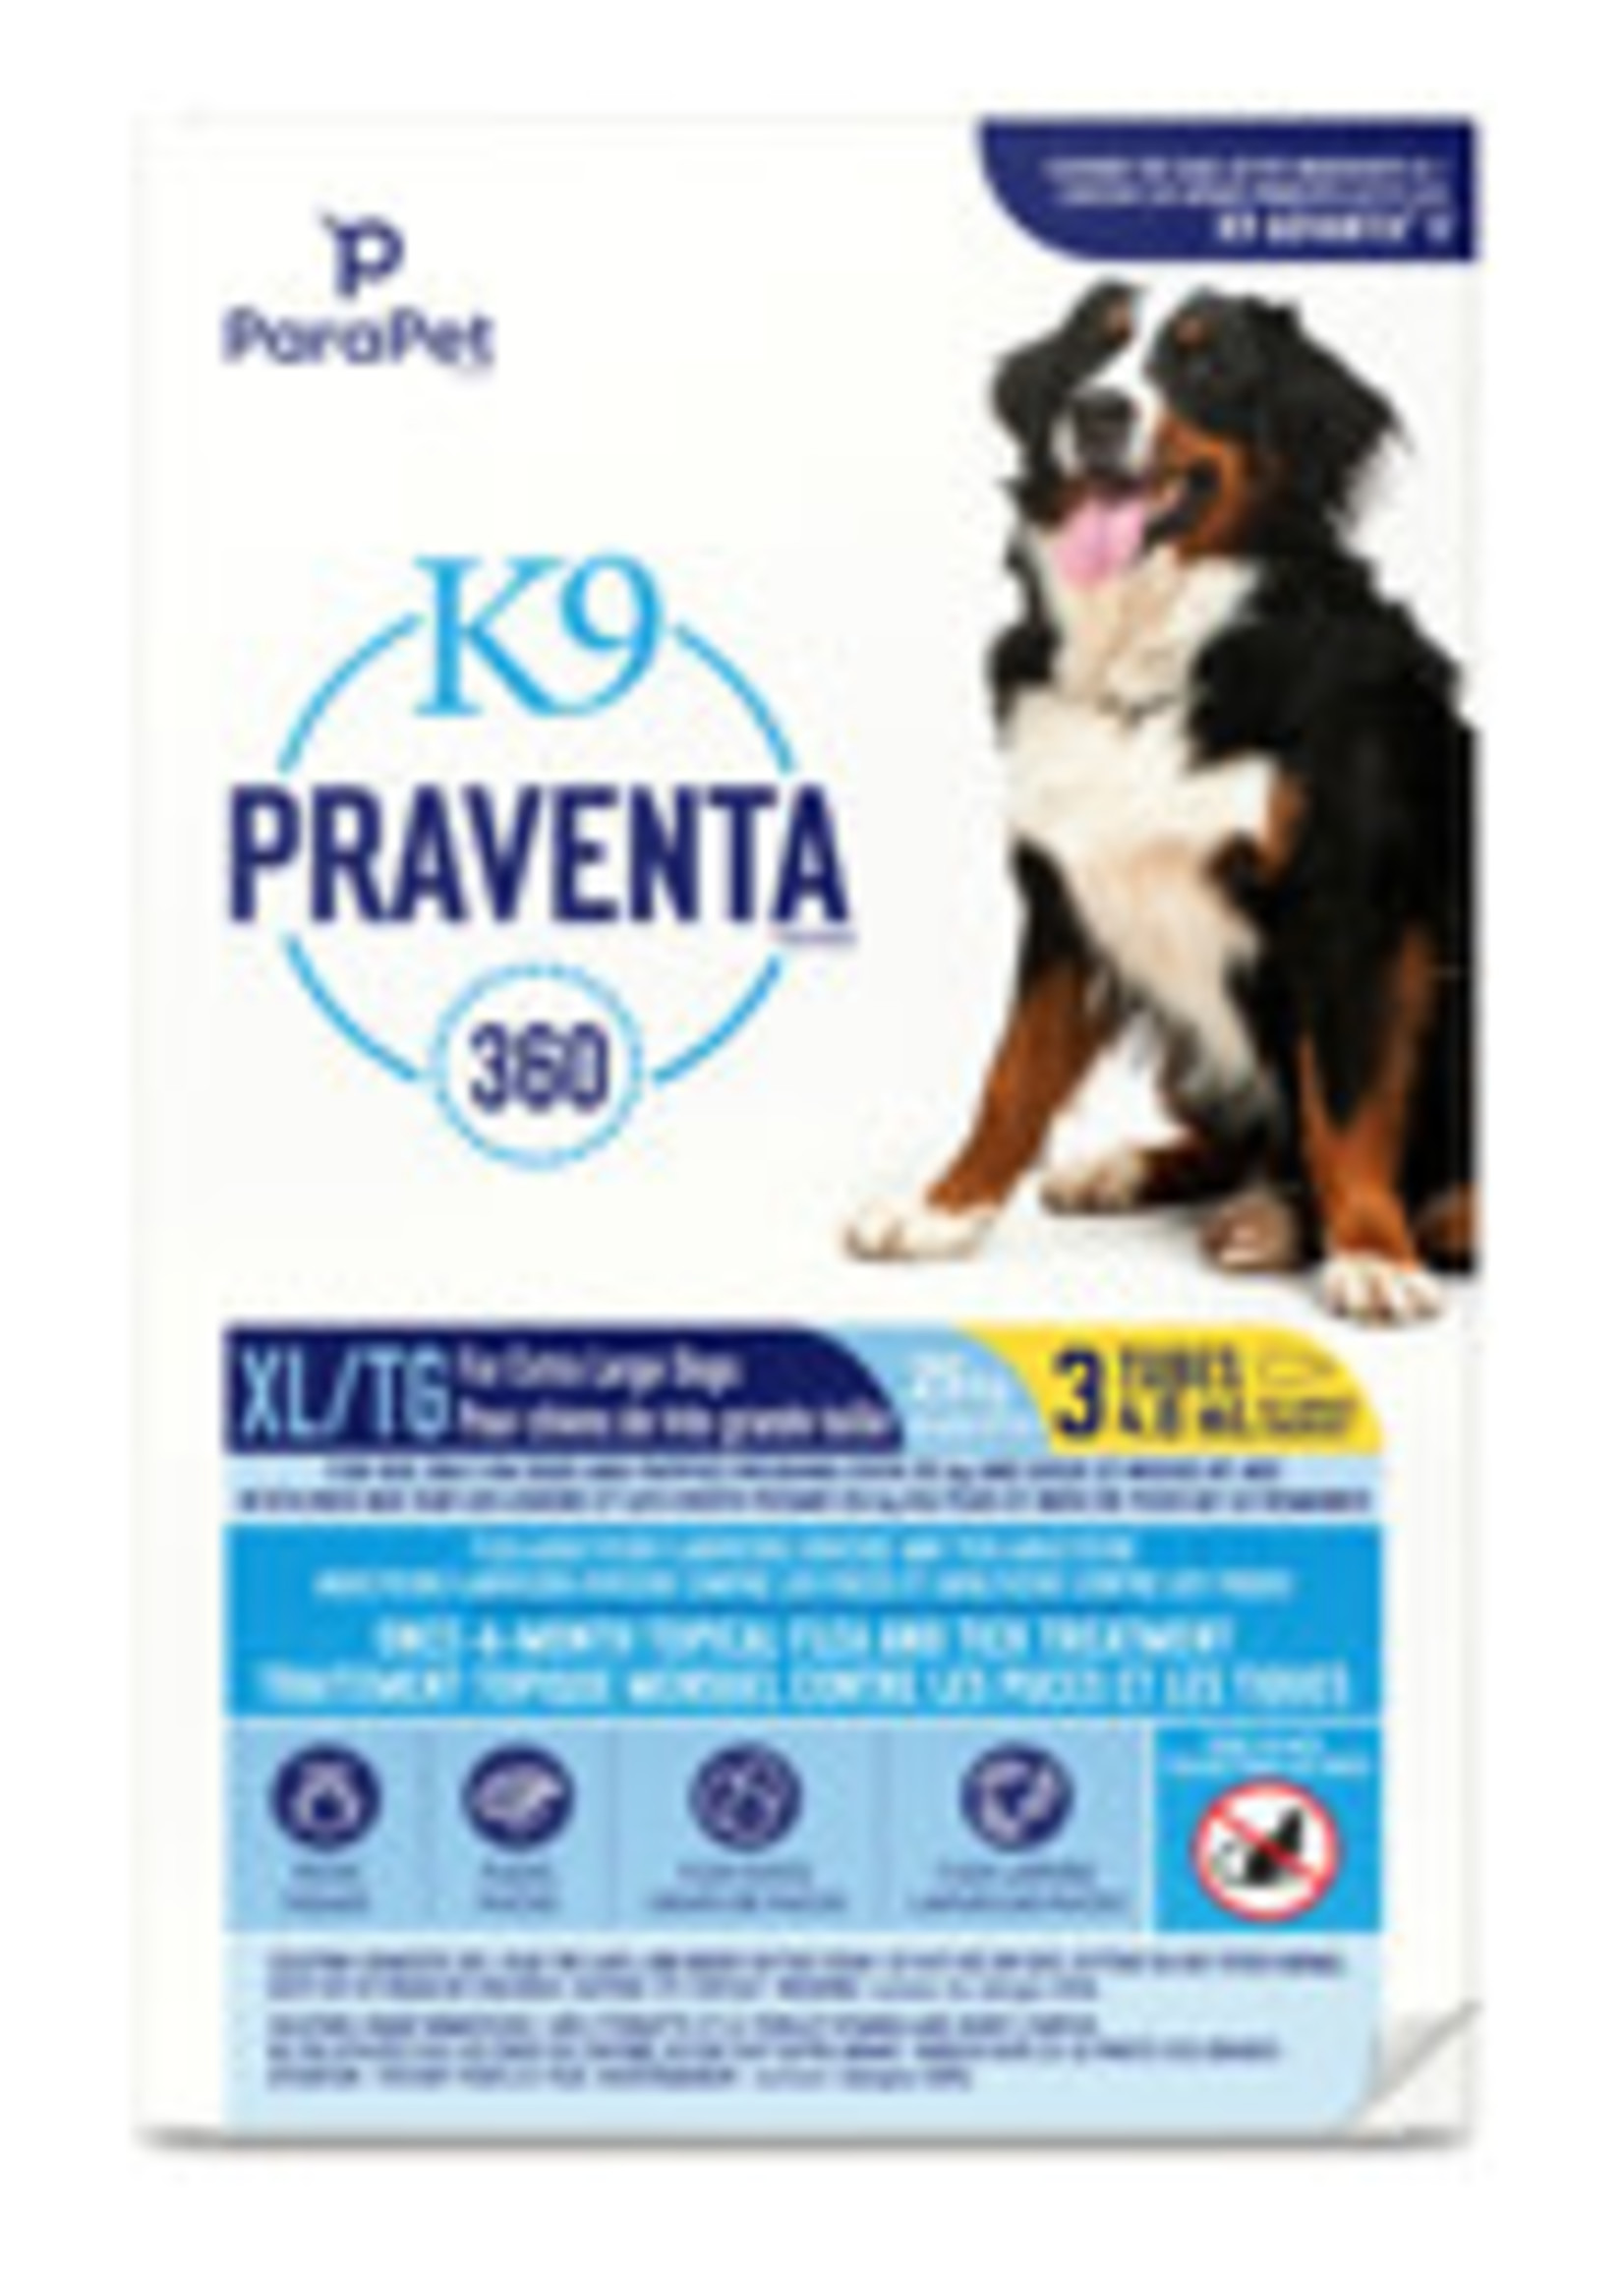 ParaPet™ K9 Praventa 360™ for Extra Large Dogs over 25kG